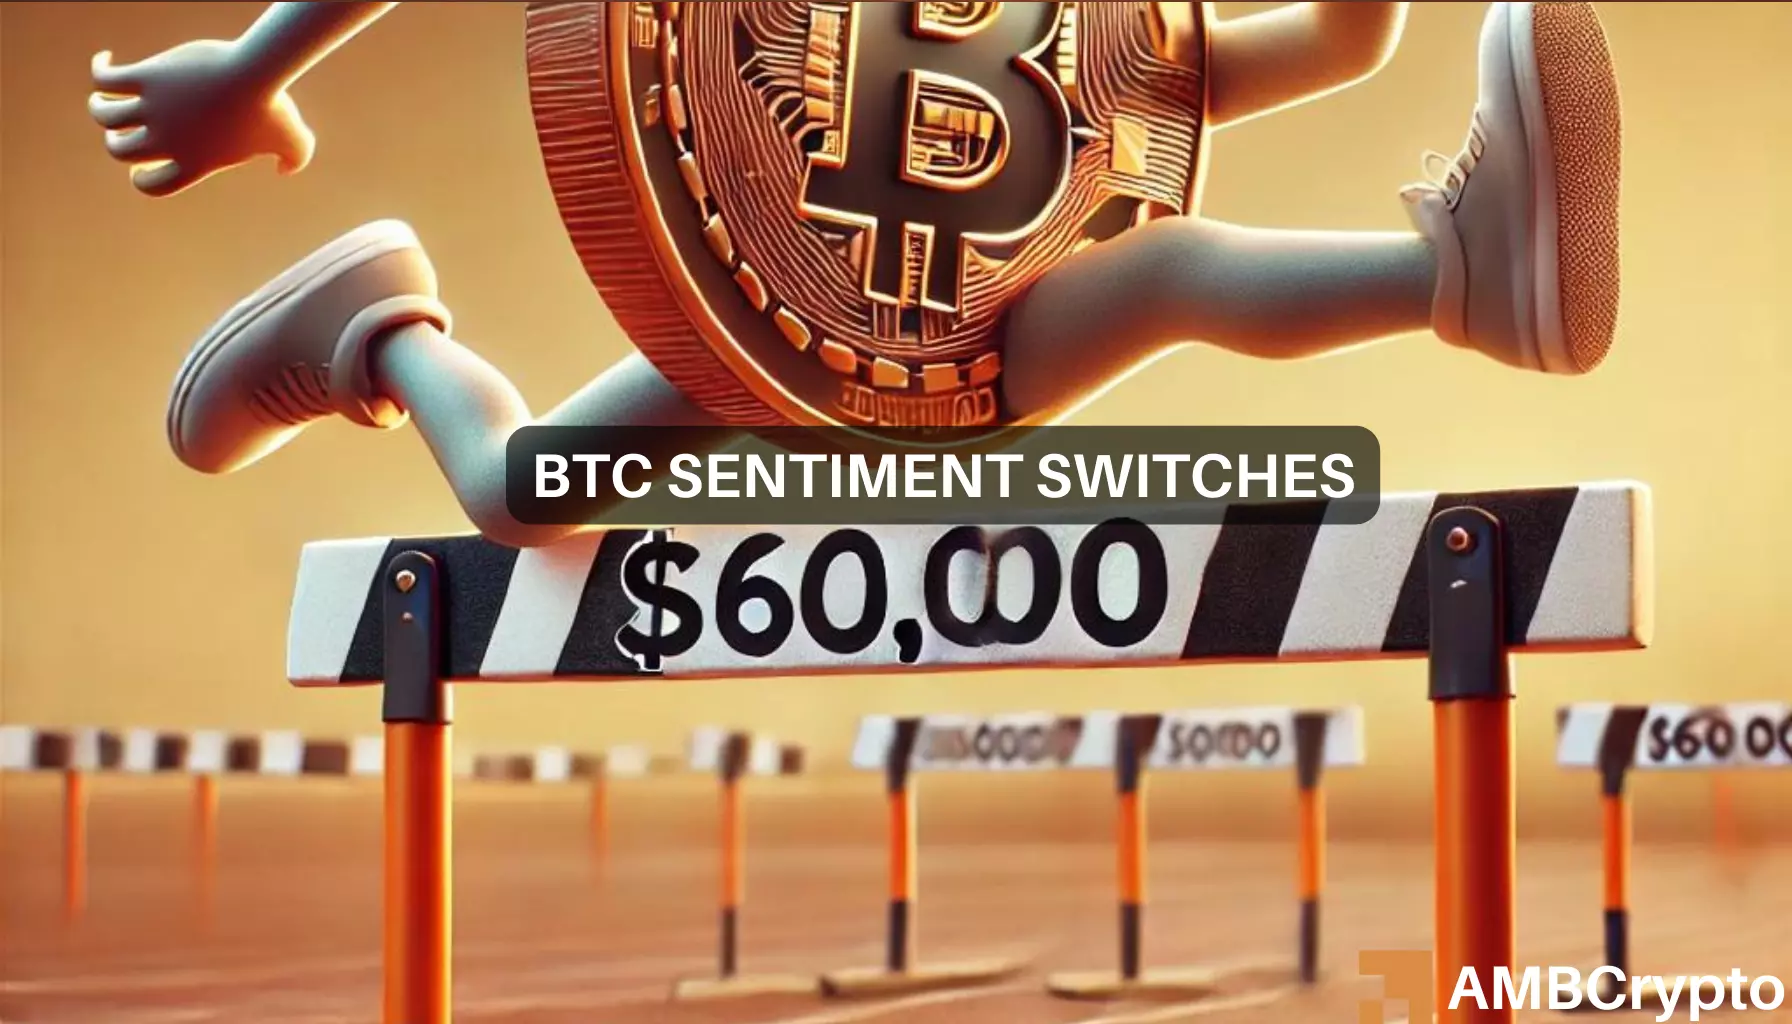 Bitcoin surpasses $60,000 as buyer confidence skyrockets